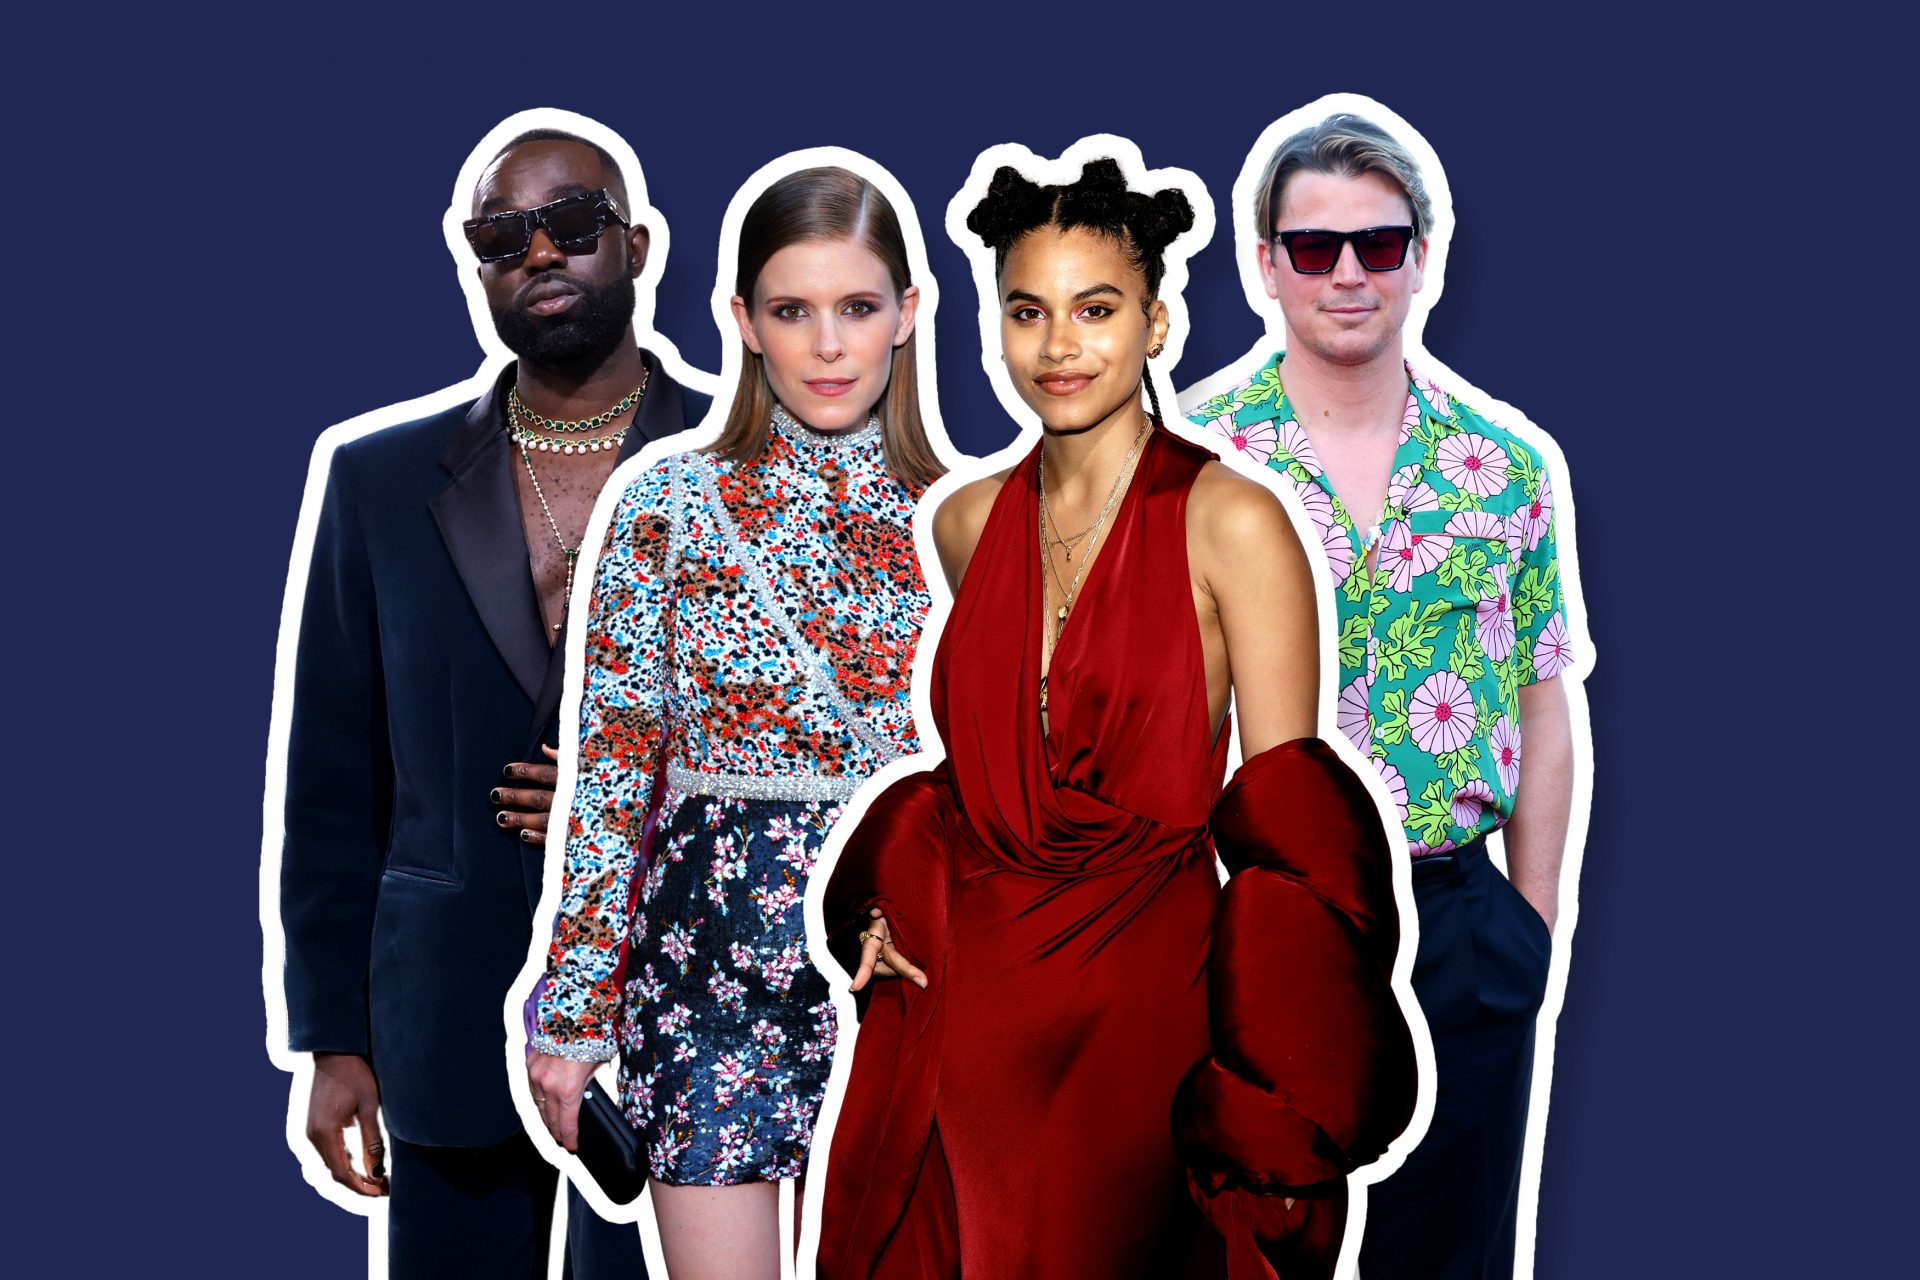 Meet the star-studded cast of Black Mirror season 6